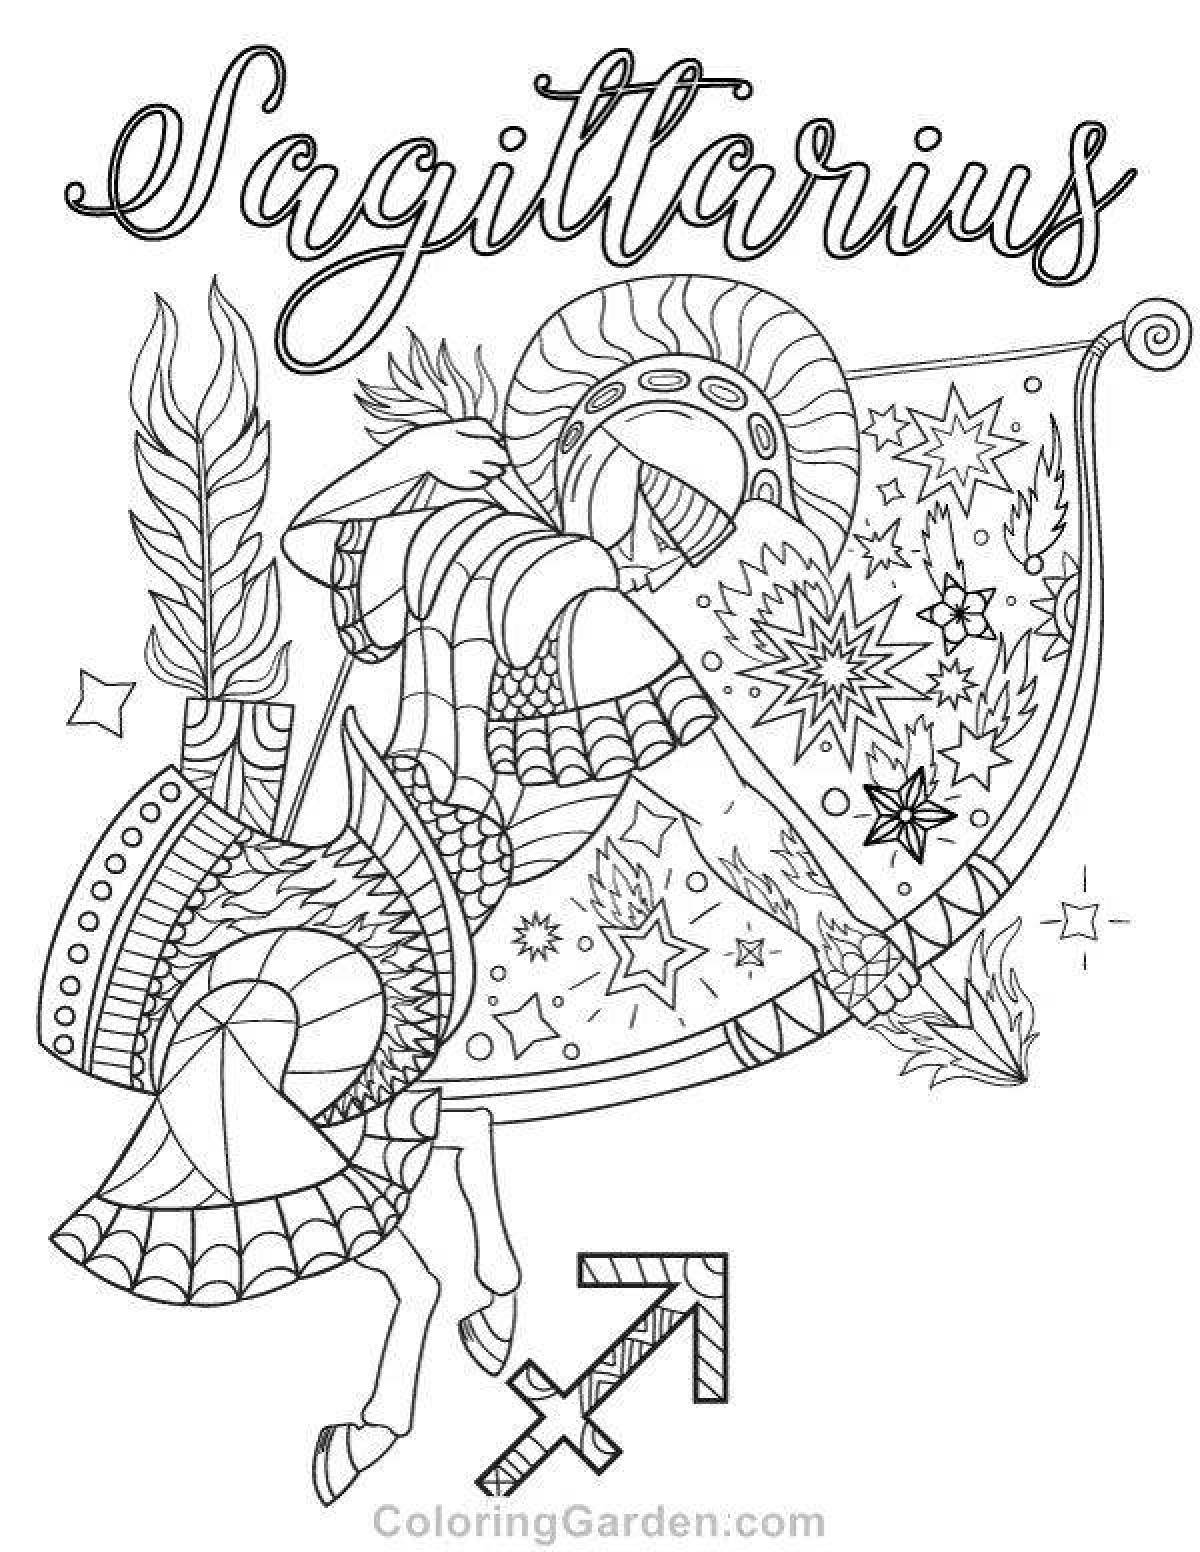 Coloring page playful sagittarius